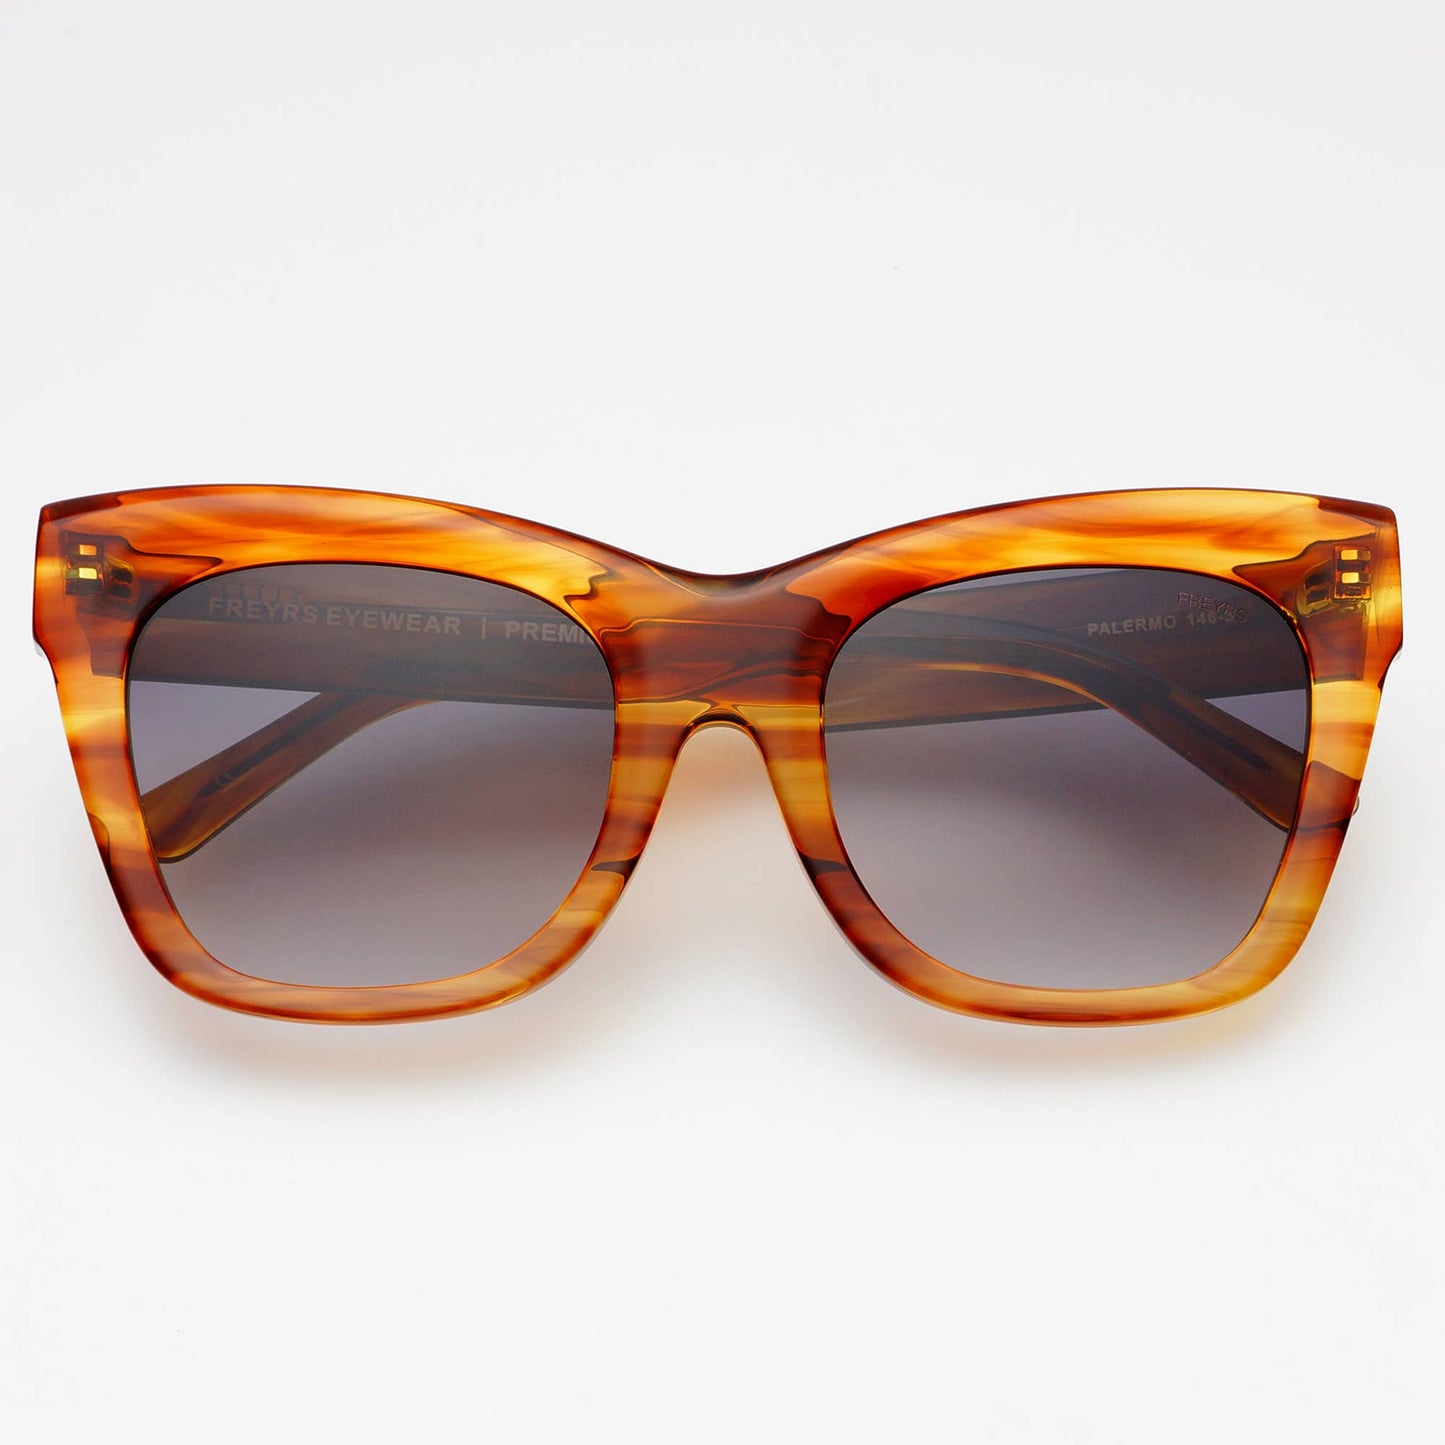 Oversized cat-eye tortoiseshell acetate sunglasses